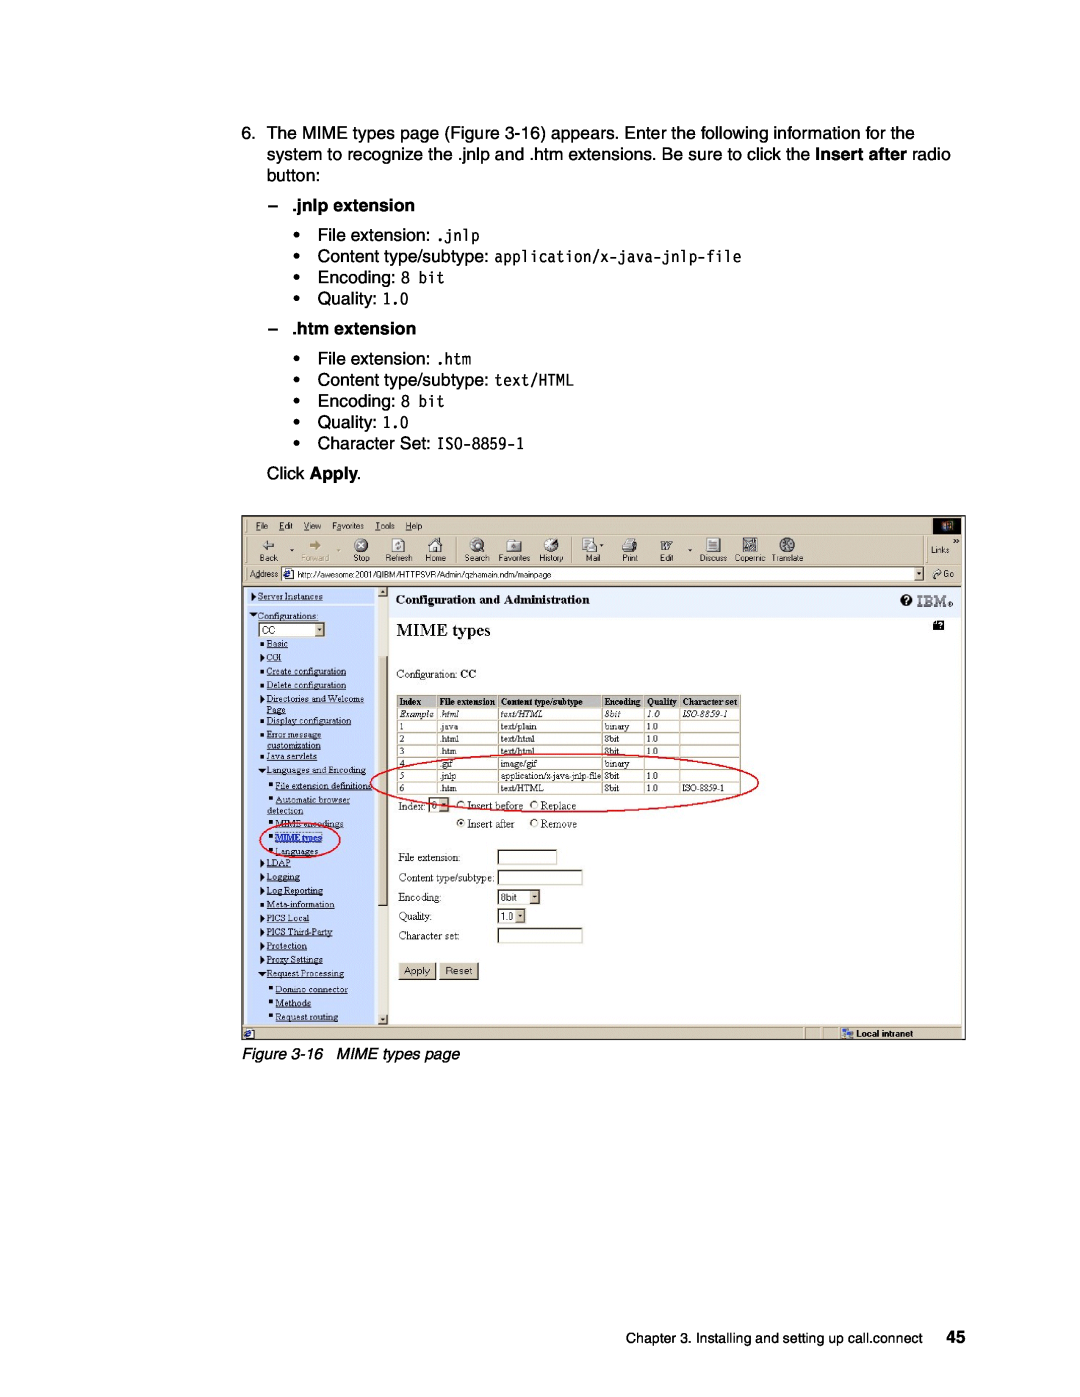 IBM SG24-6526-00 manual jnlp extension, htm extension 